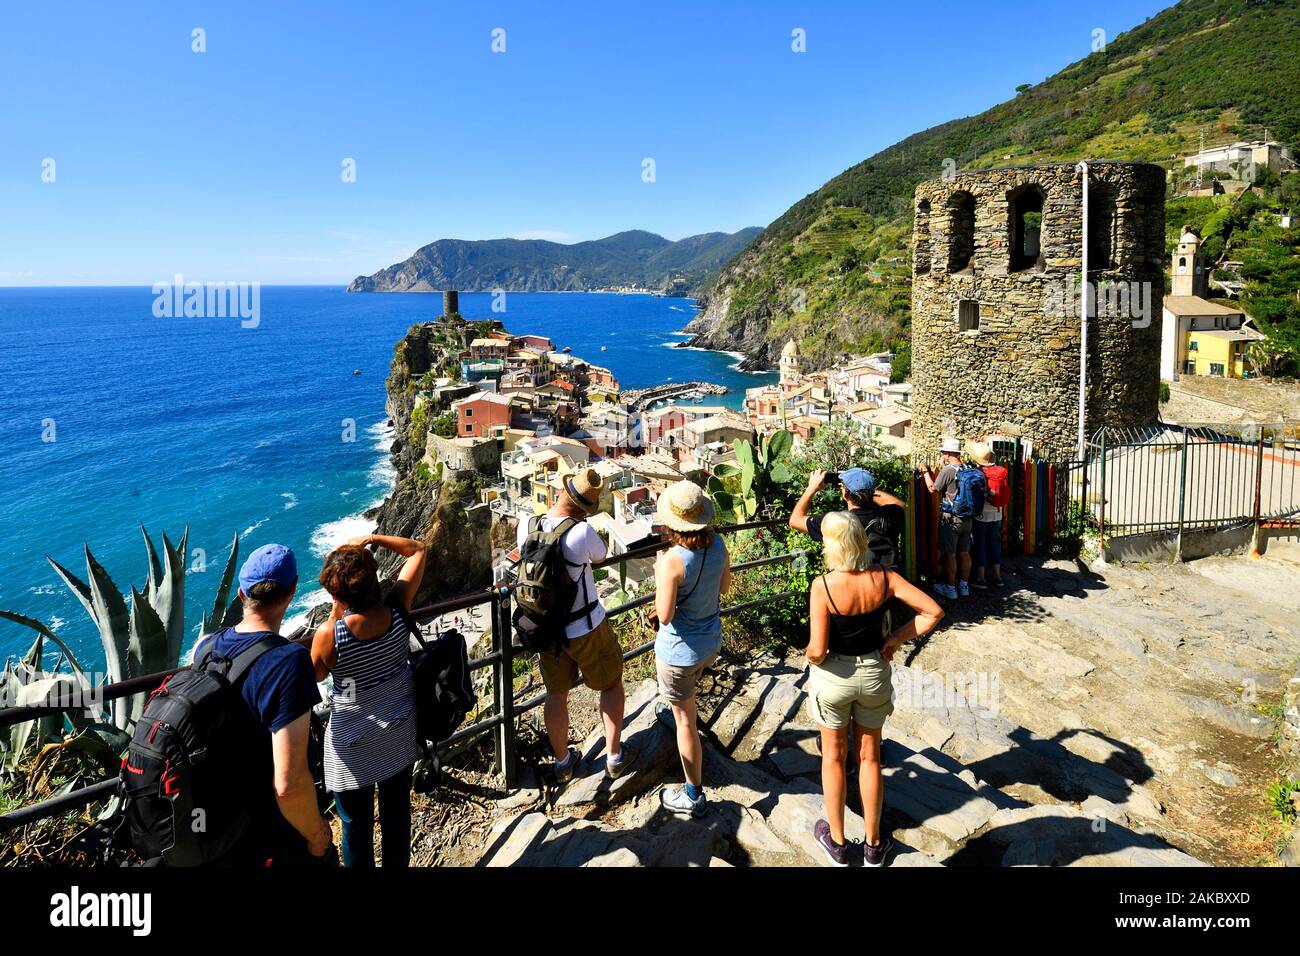 Italien, Ligurien, La Spezia Provinz, der Nationalpark der Cinque Terre, ein UNESCO Weltkulturerbe, Azuverde oder Fußgänger Coastal Trail Verknüpfung von Corniglia nach Monterosso, Vernazza, Corniglia Dorf Stockfoto